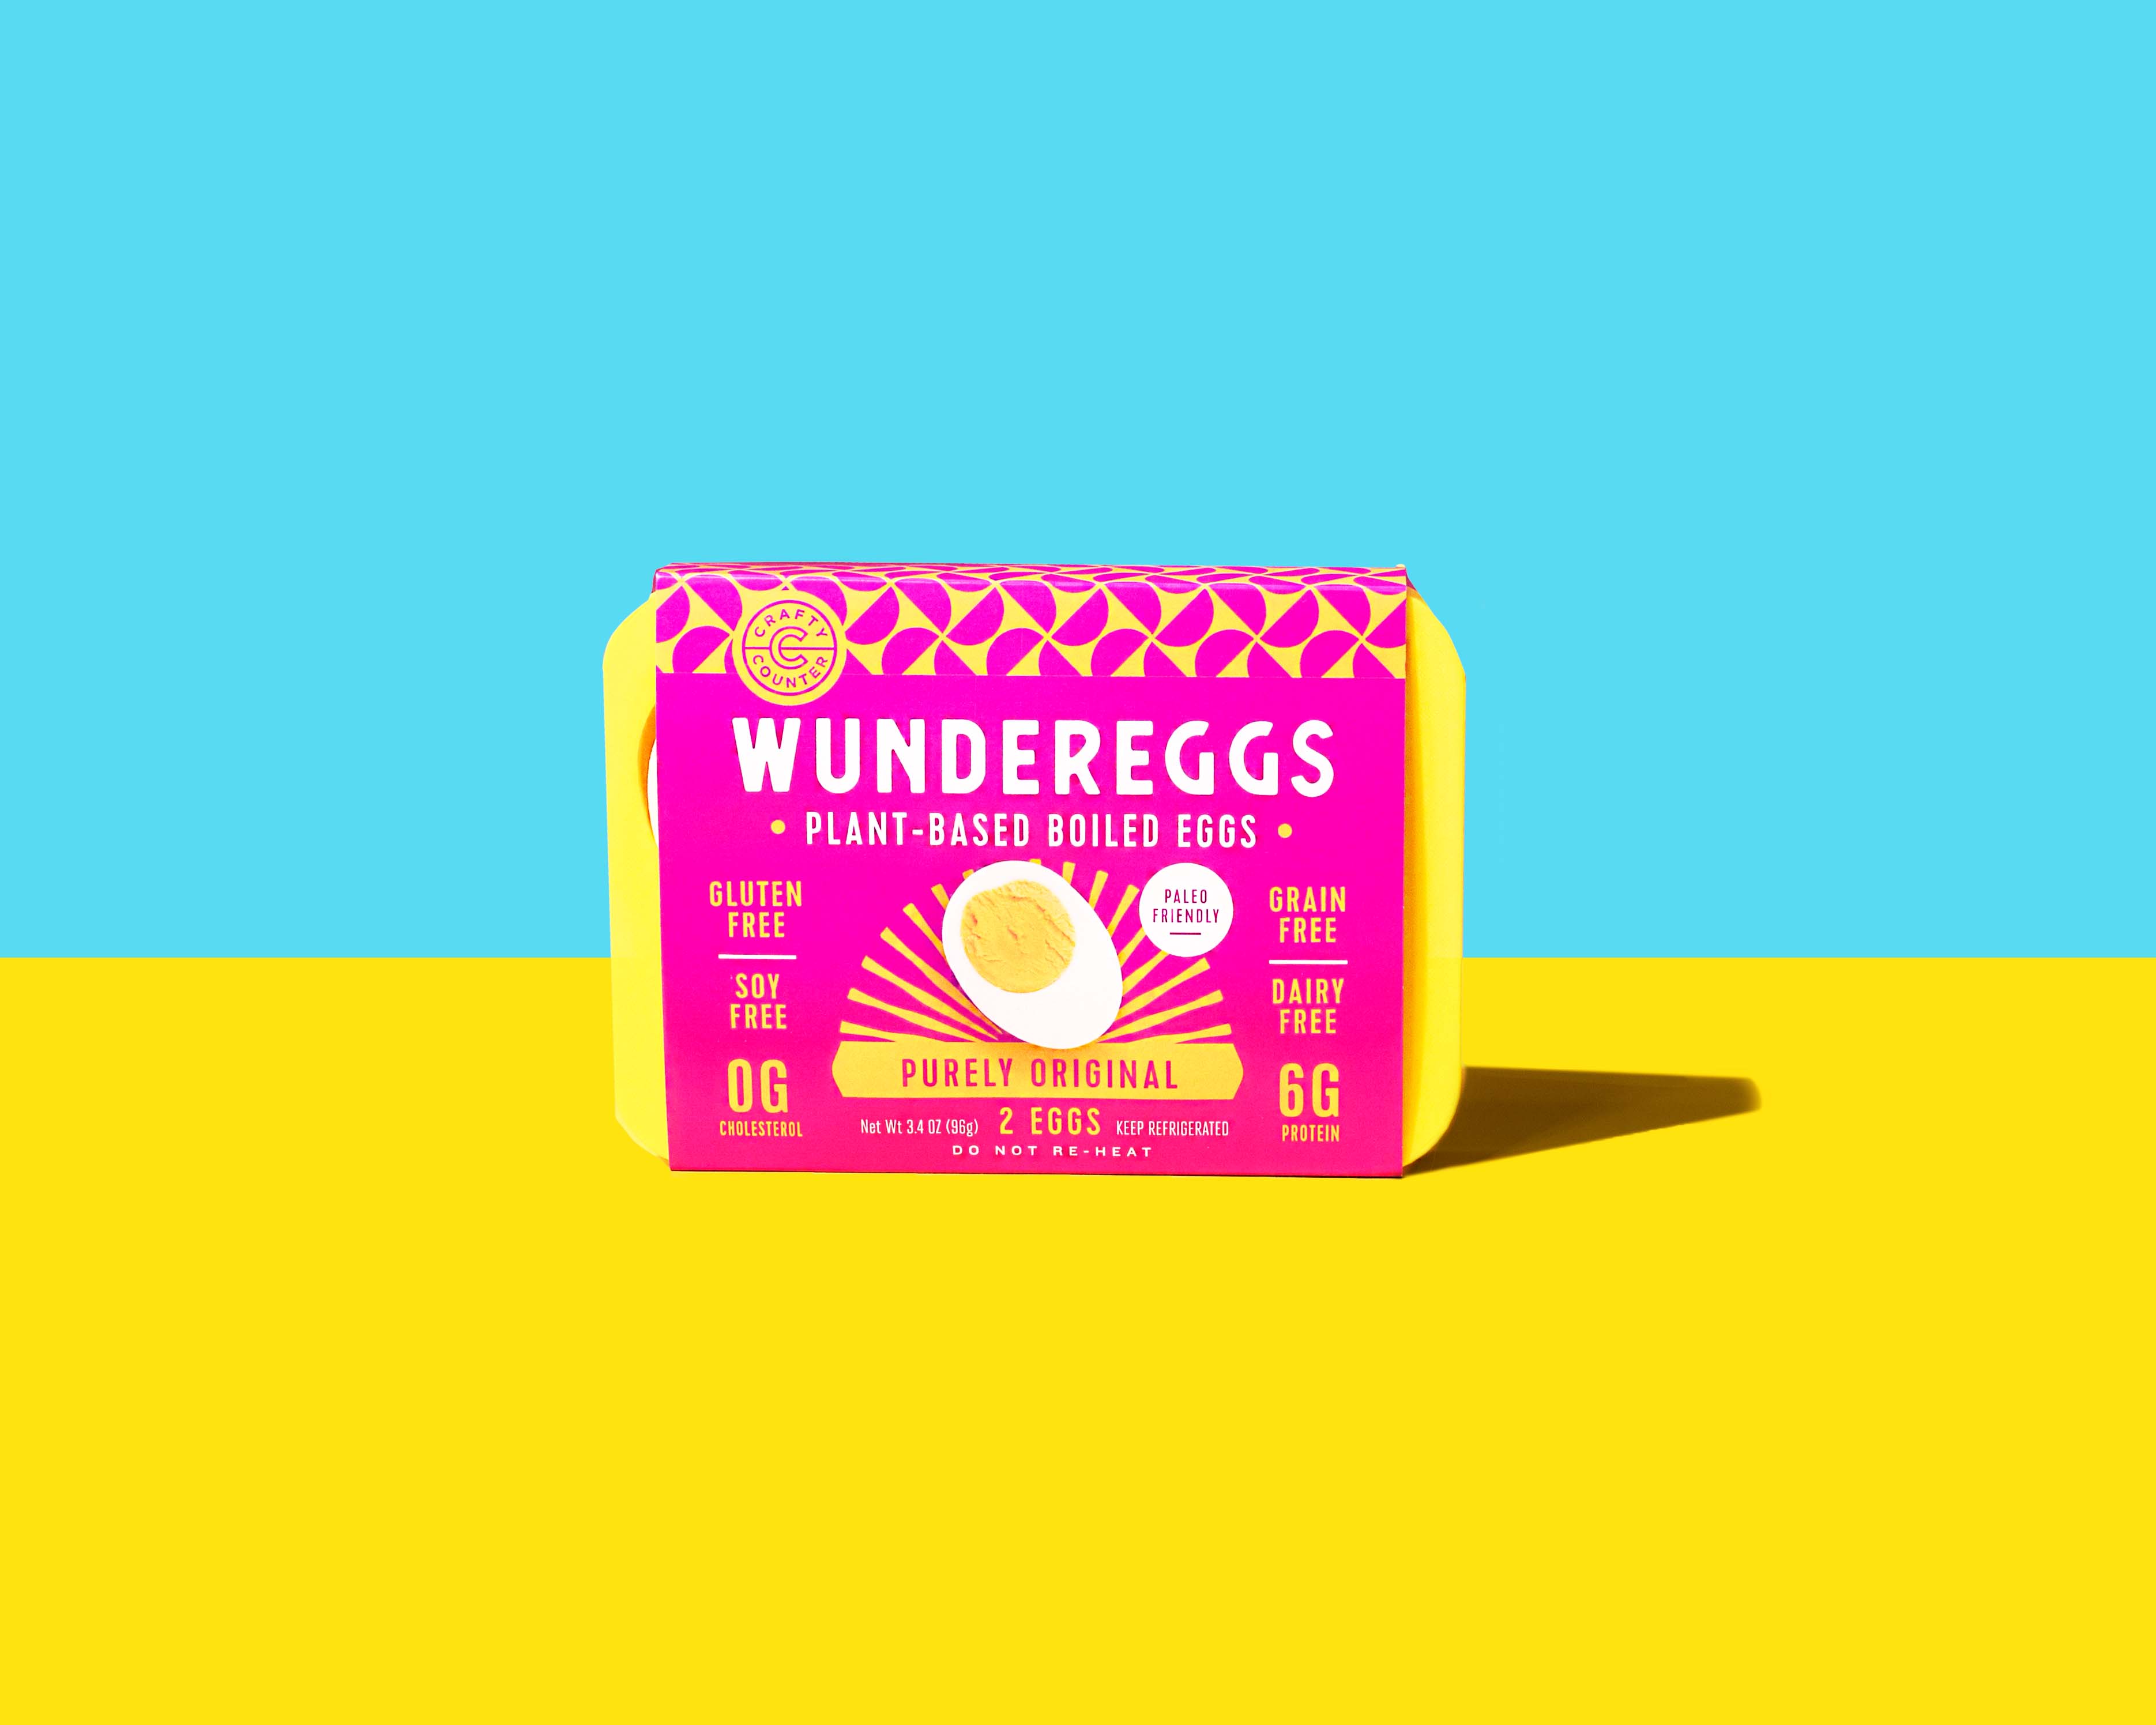 Why did we create WunderEggs?